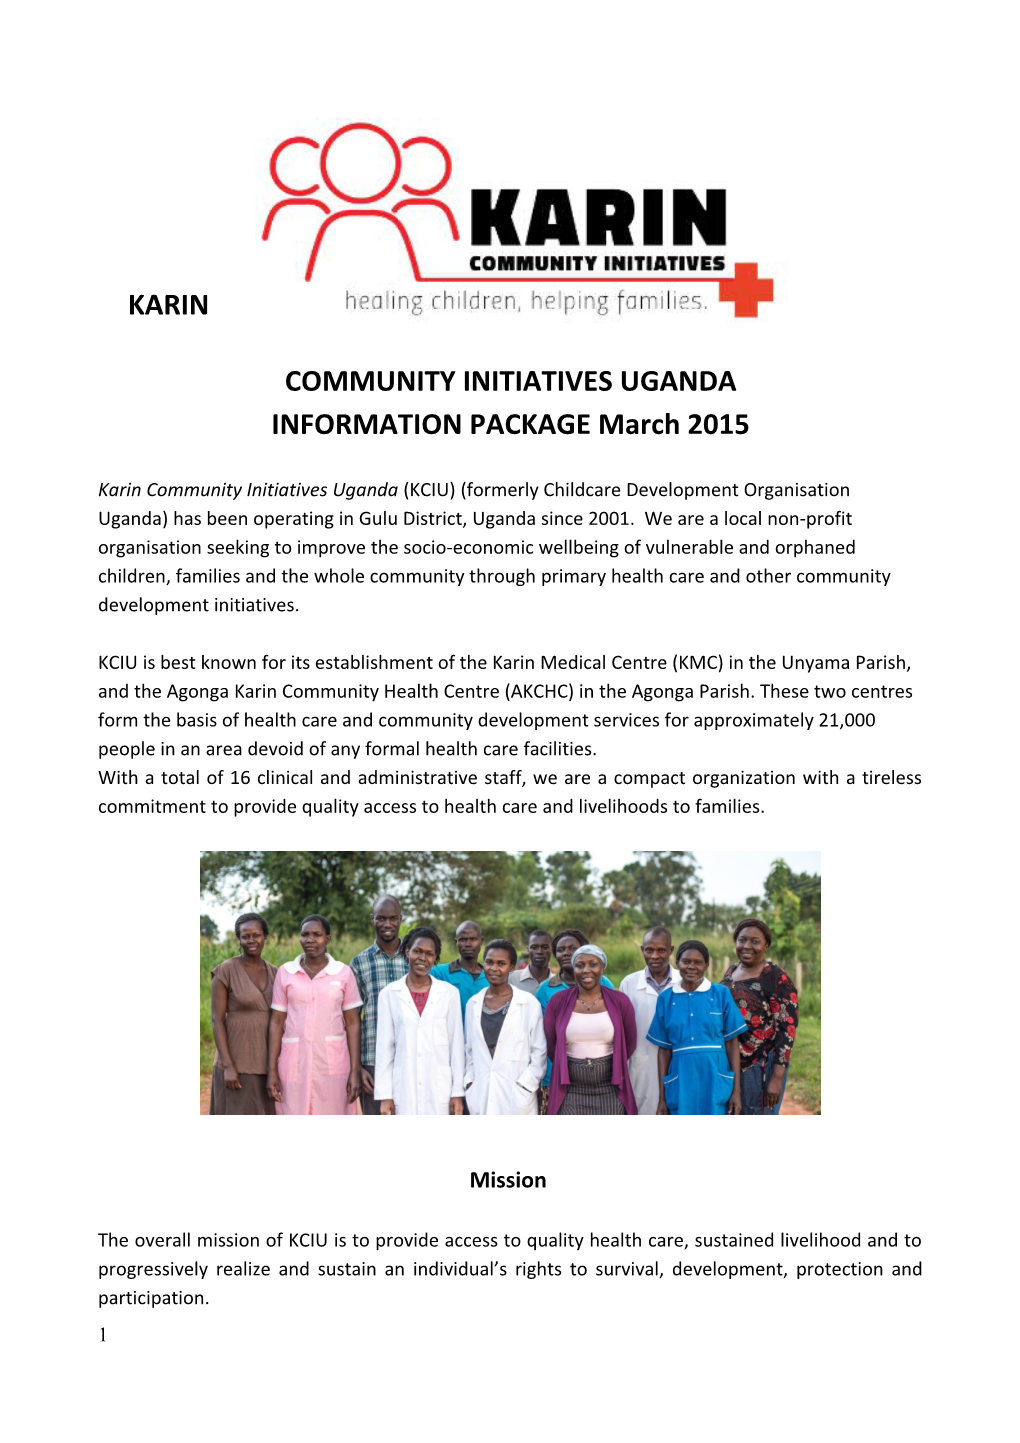 Karin Community Initiatives Uganda